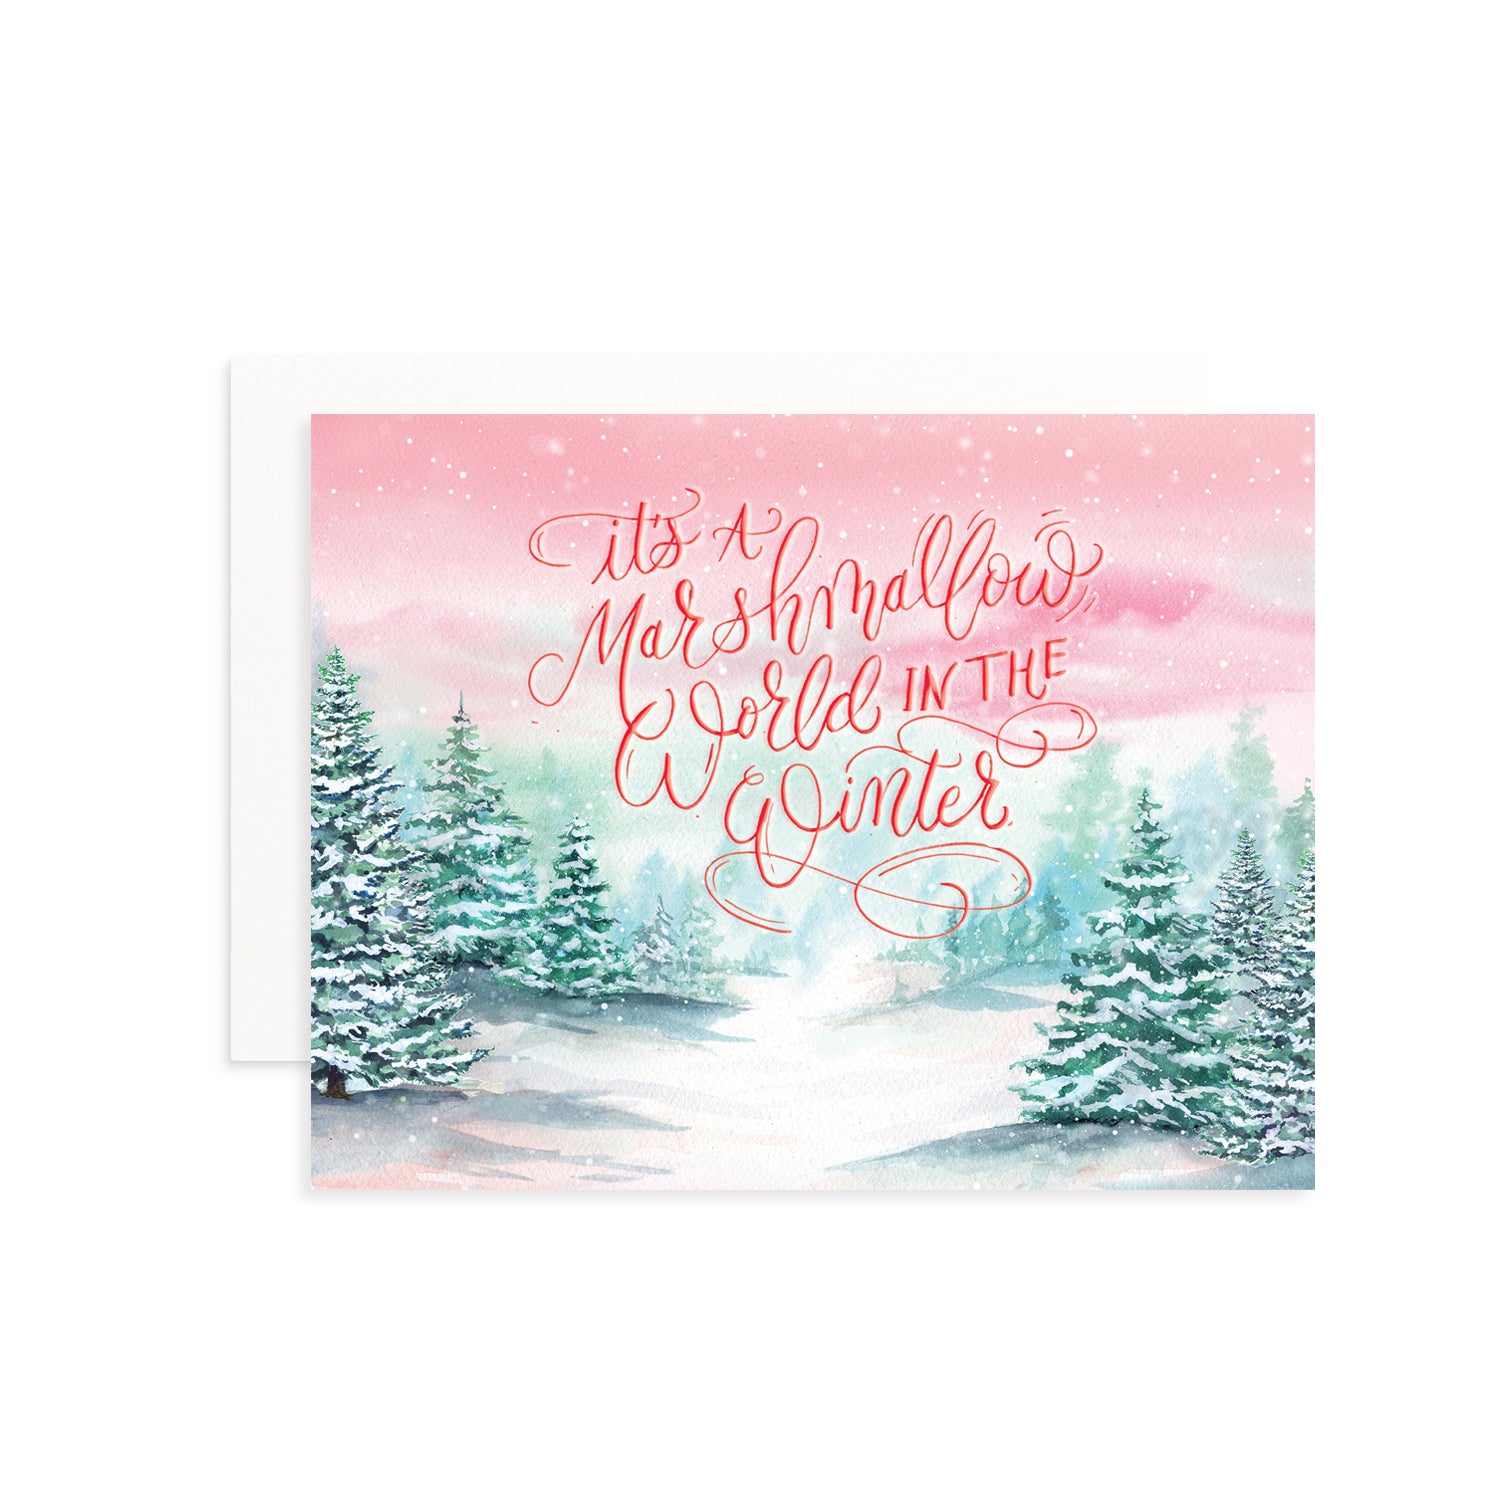 Marshmallow World Christmas Greeting Card